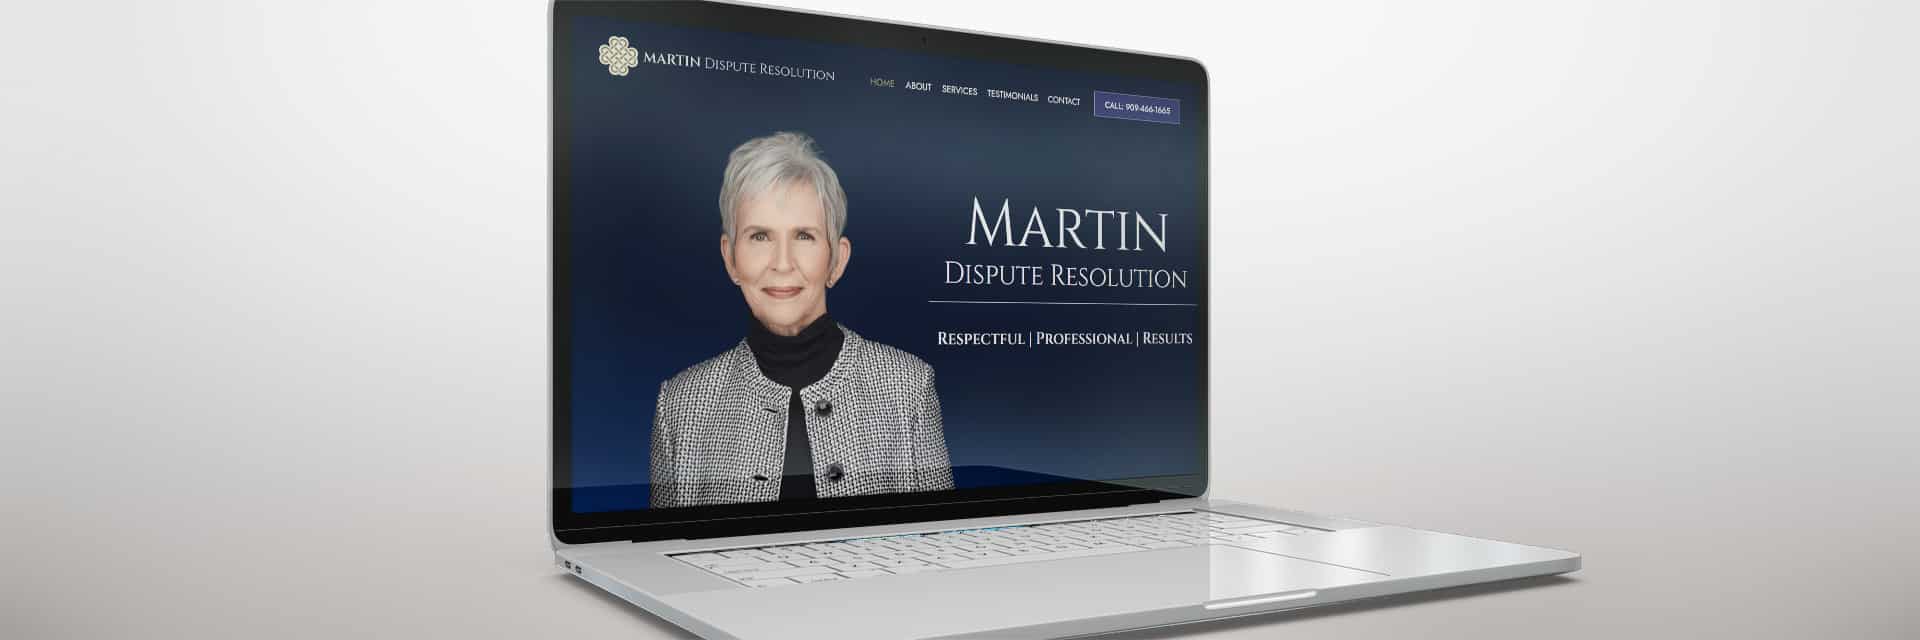 Martin website design 3